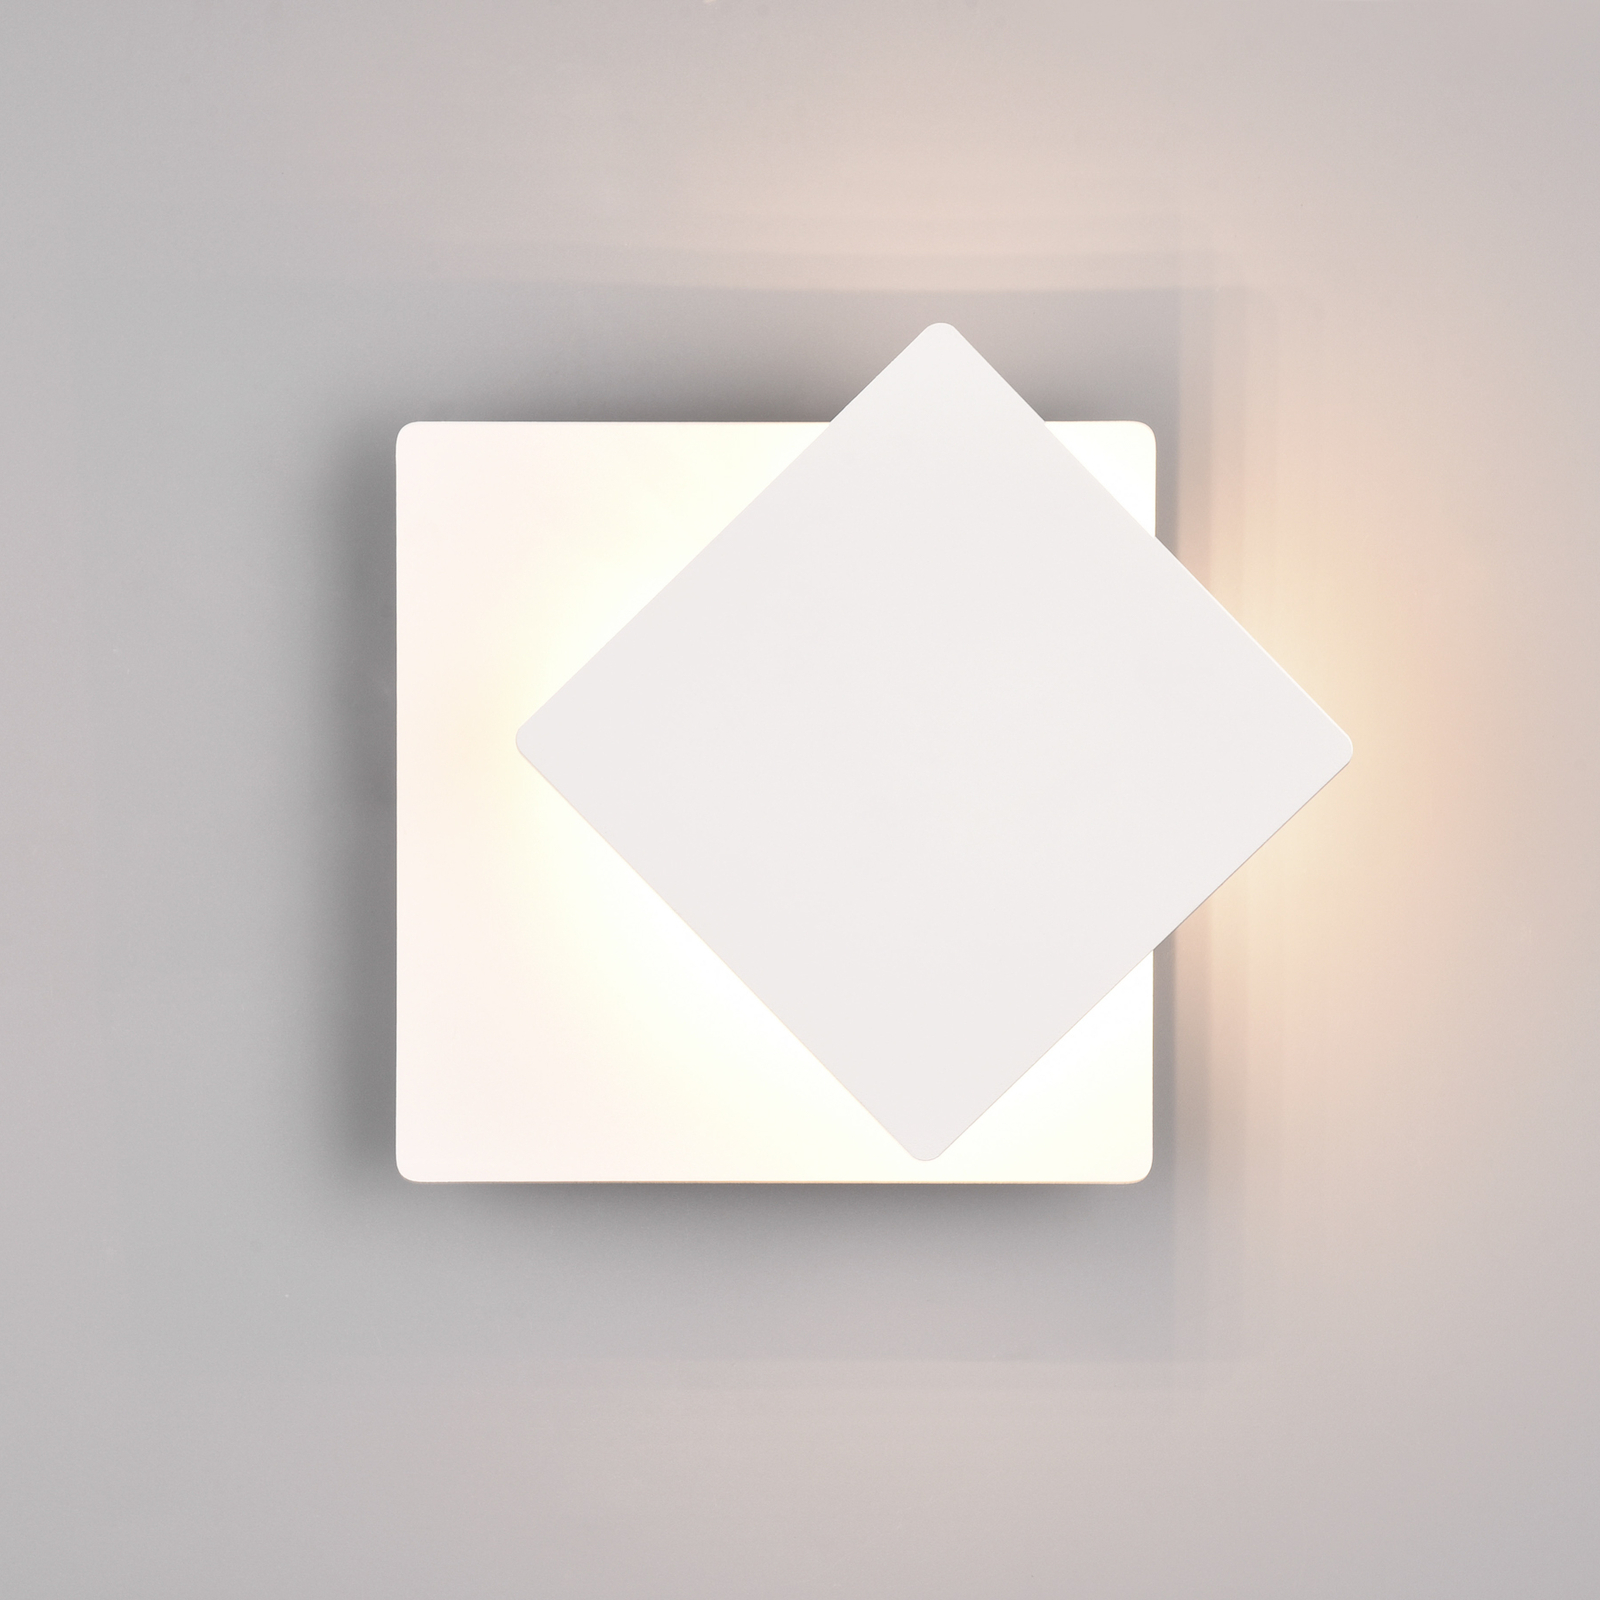 LED wall light Mio, angular lens, matt white, indirect